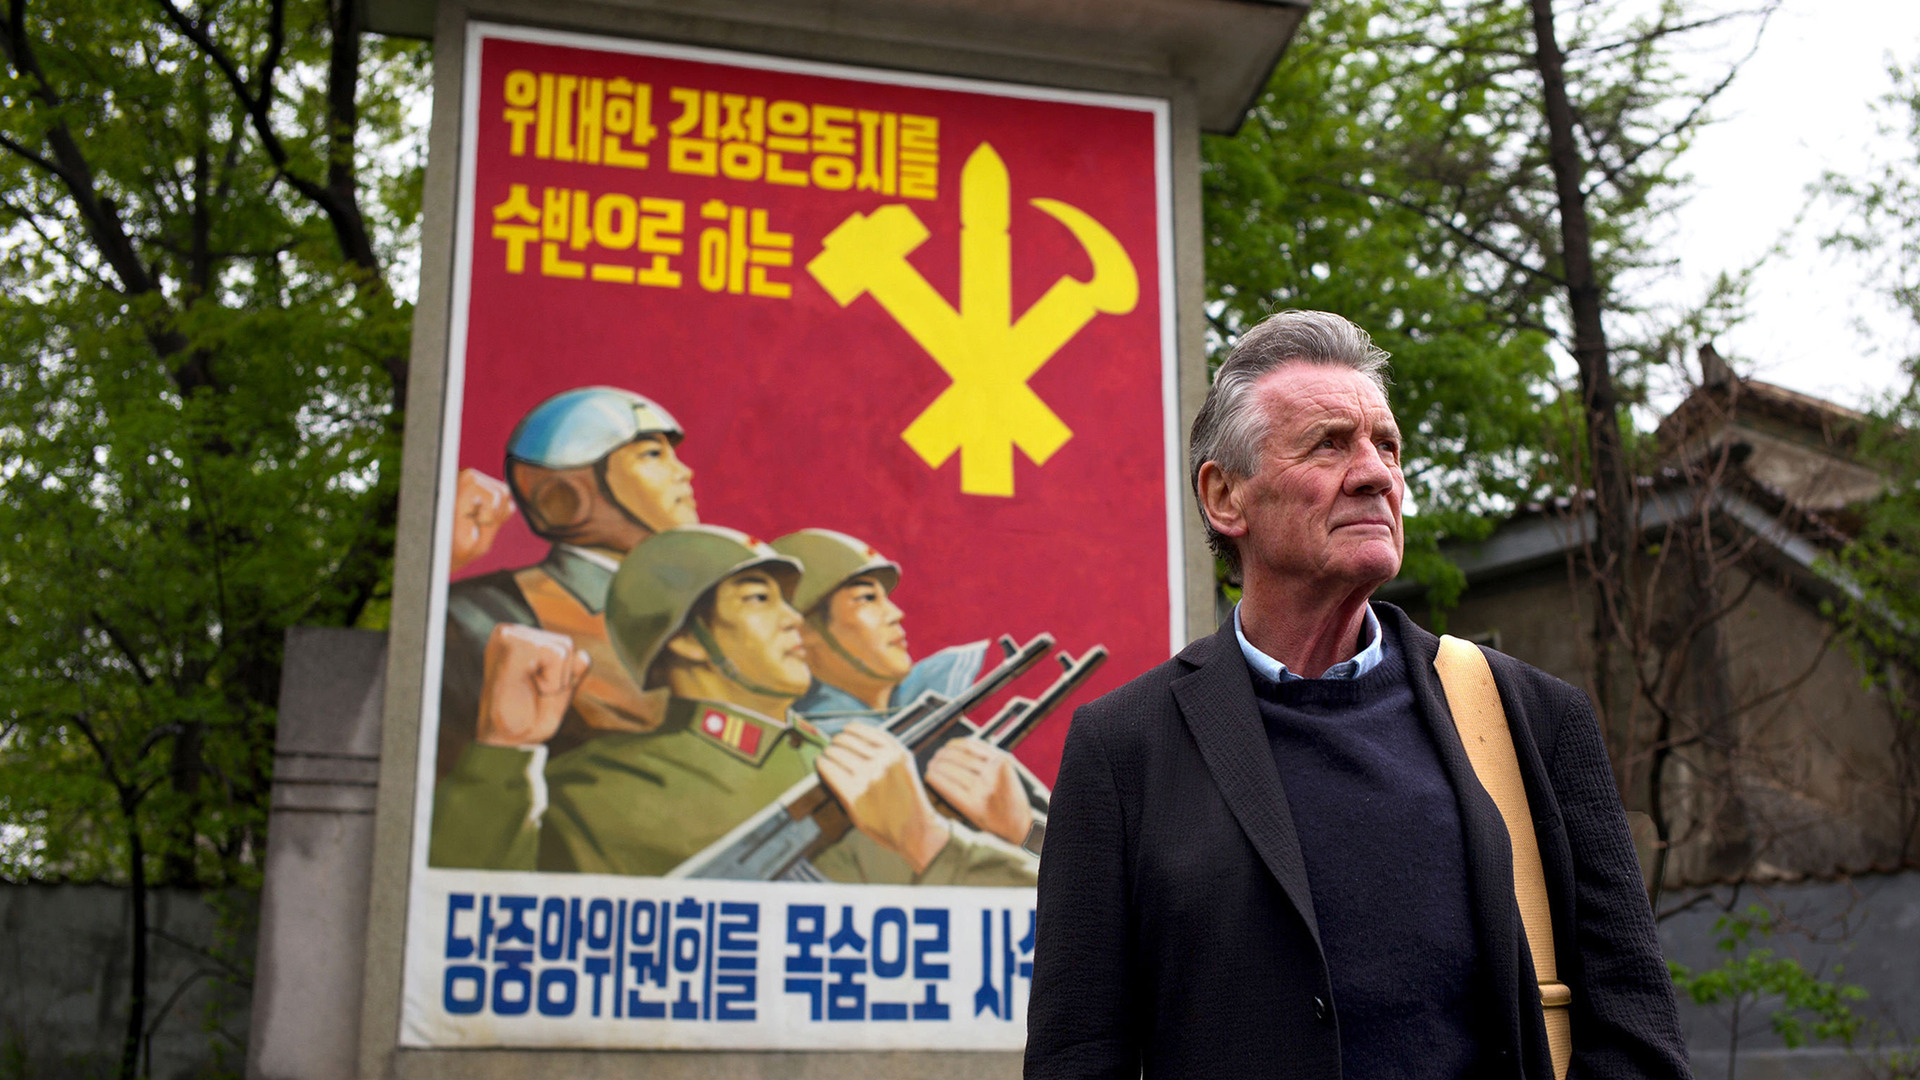 Show Michael Palin in North Korea